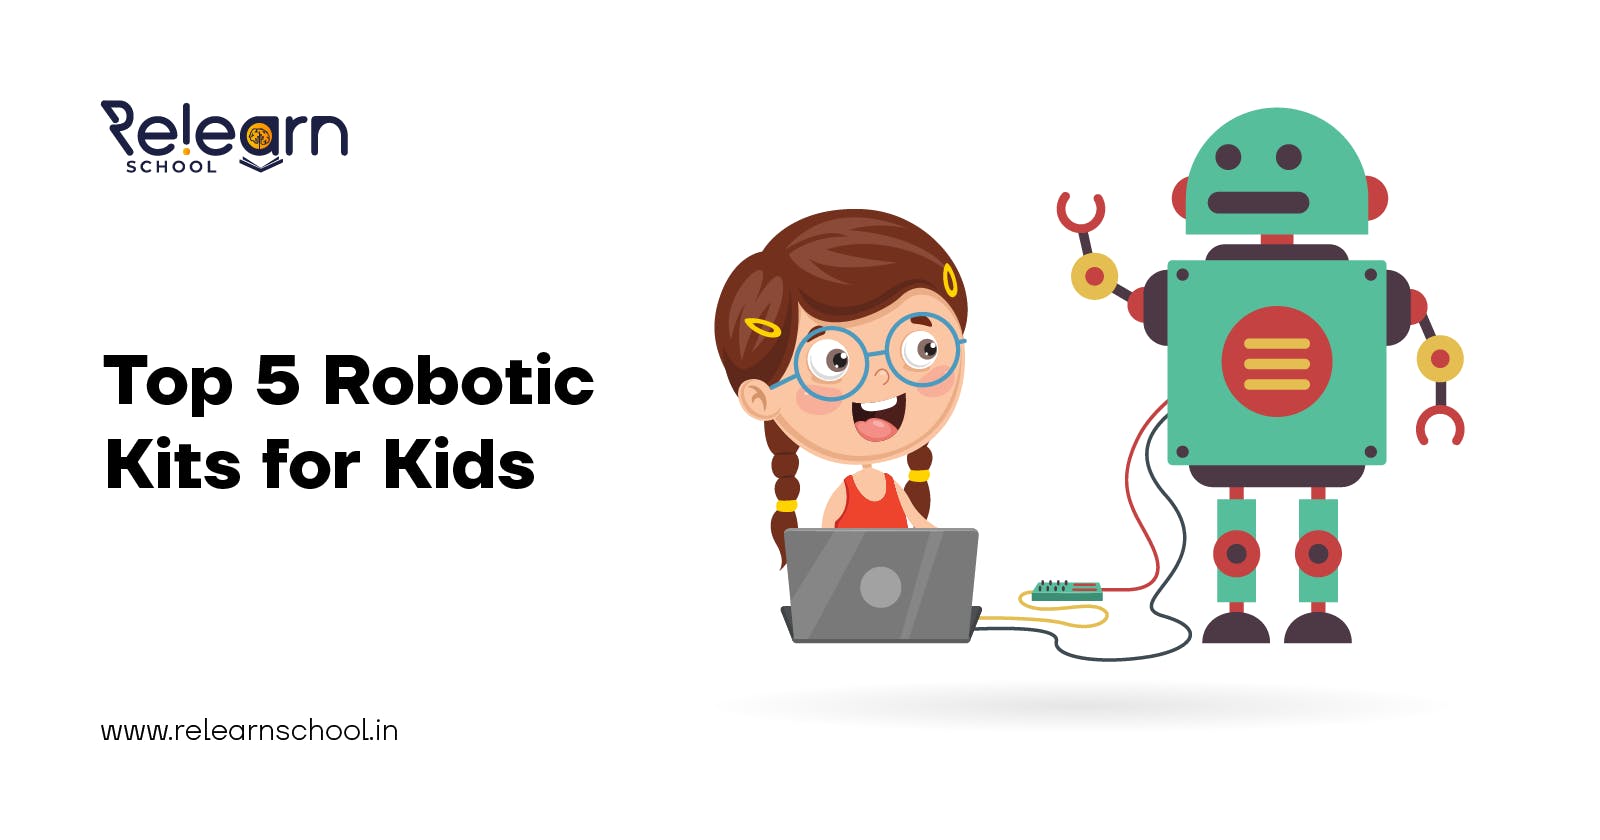 Top 5 Robotic Kits for Kids